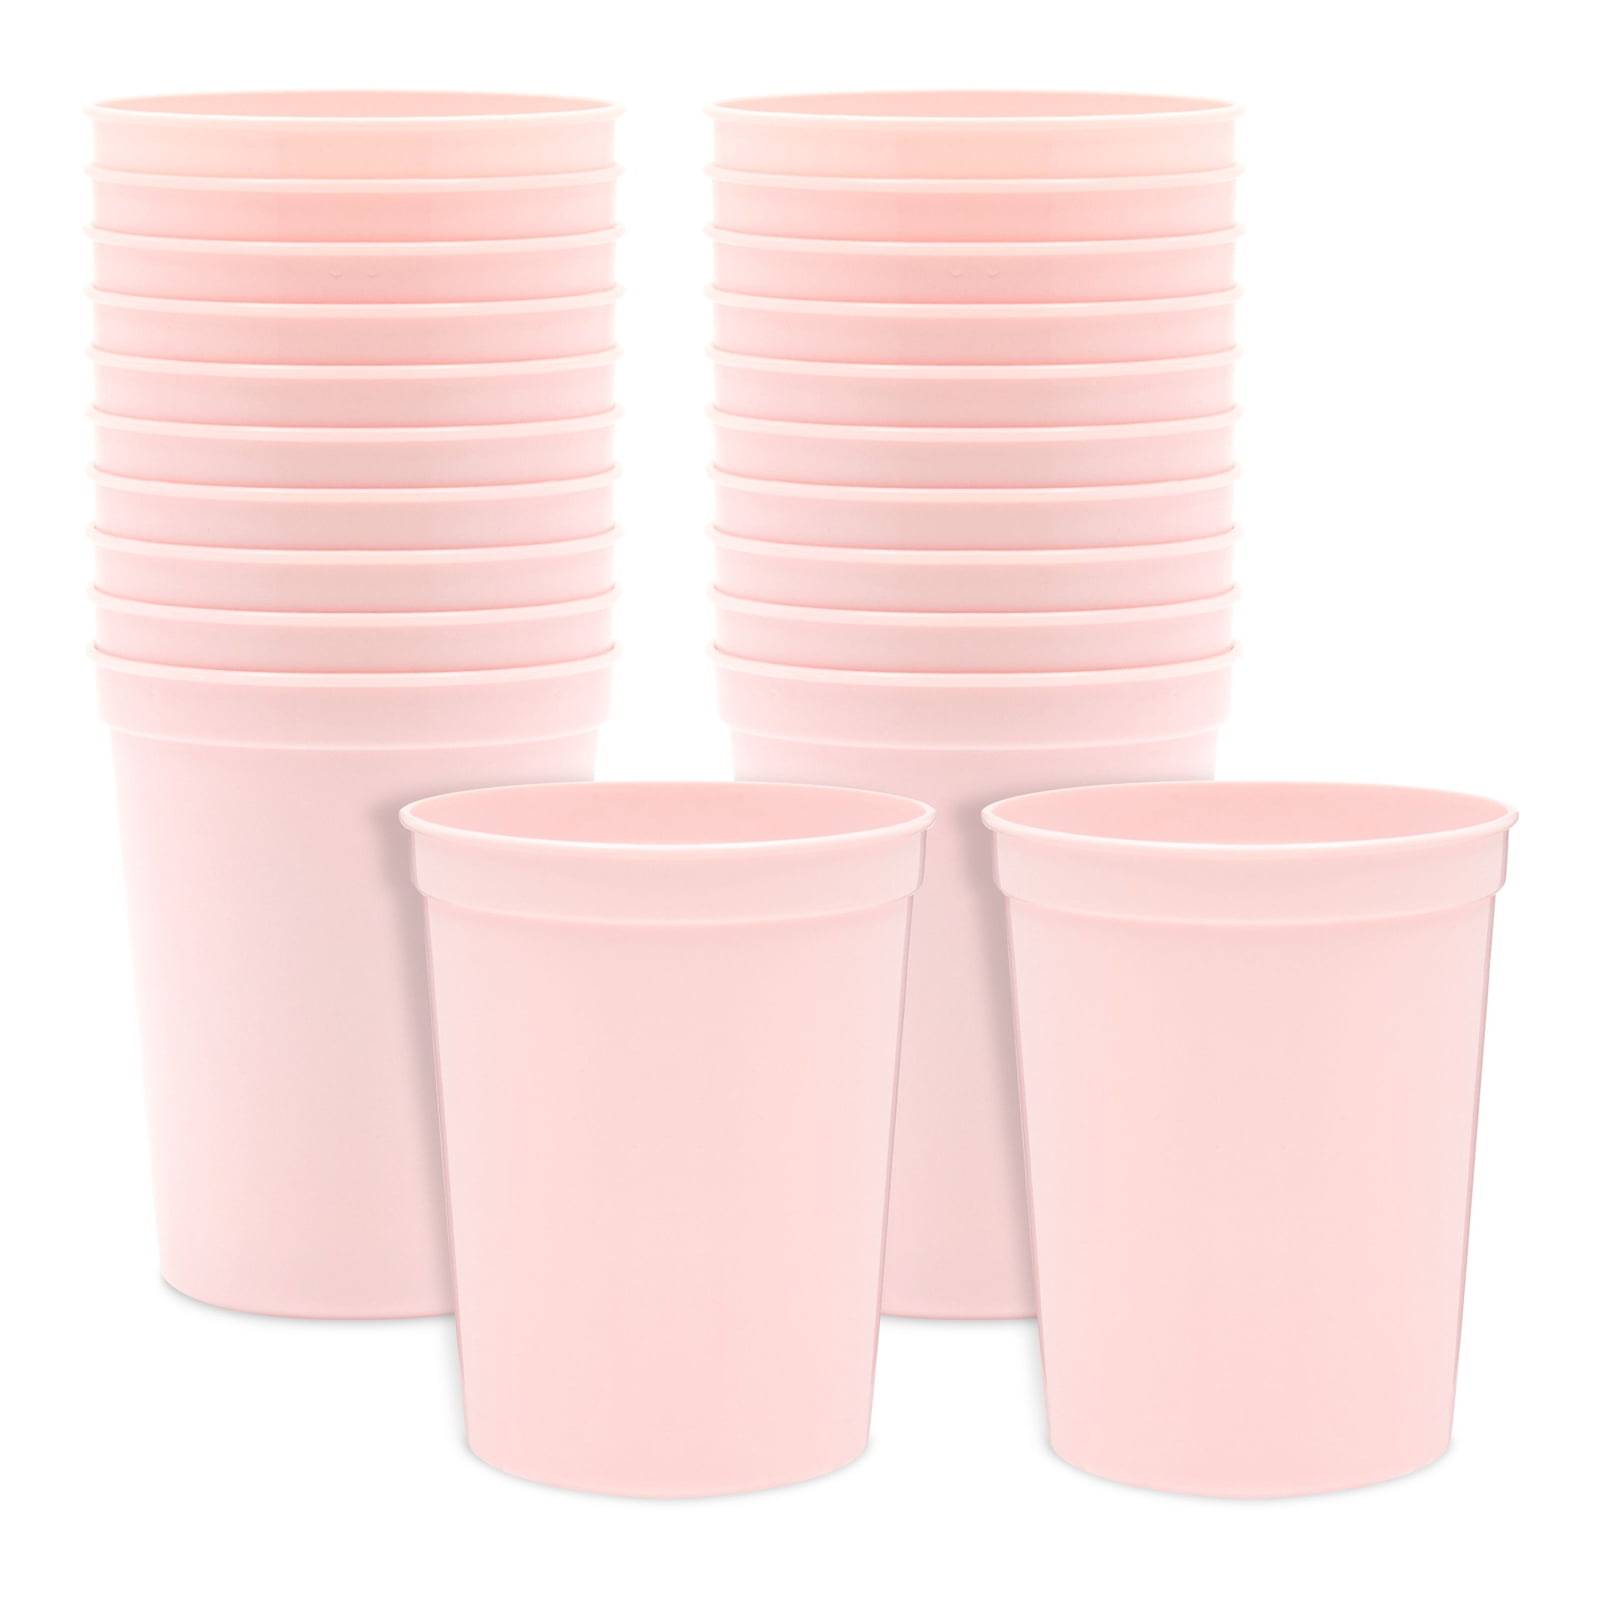 Best Brands 24pc Mini Plastic 2oz Bright Neon Color Cups 